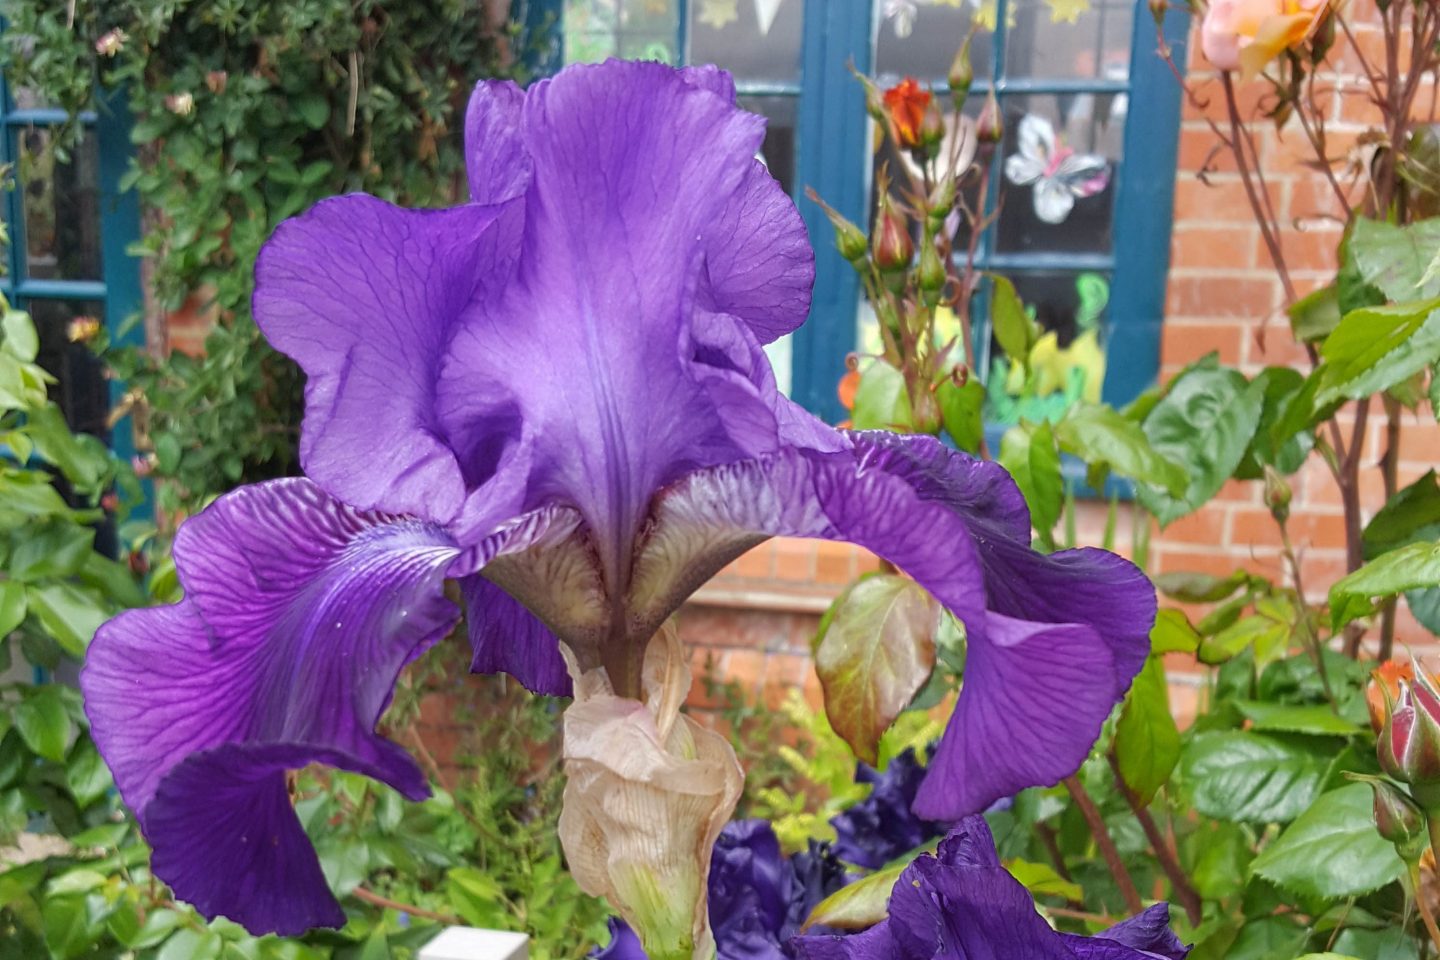 A bearded iris with deep purple flowers